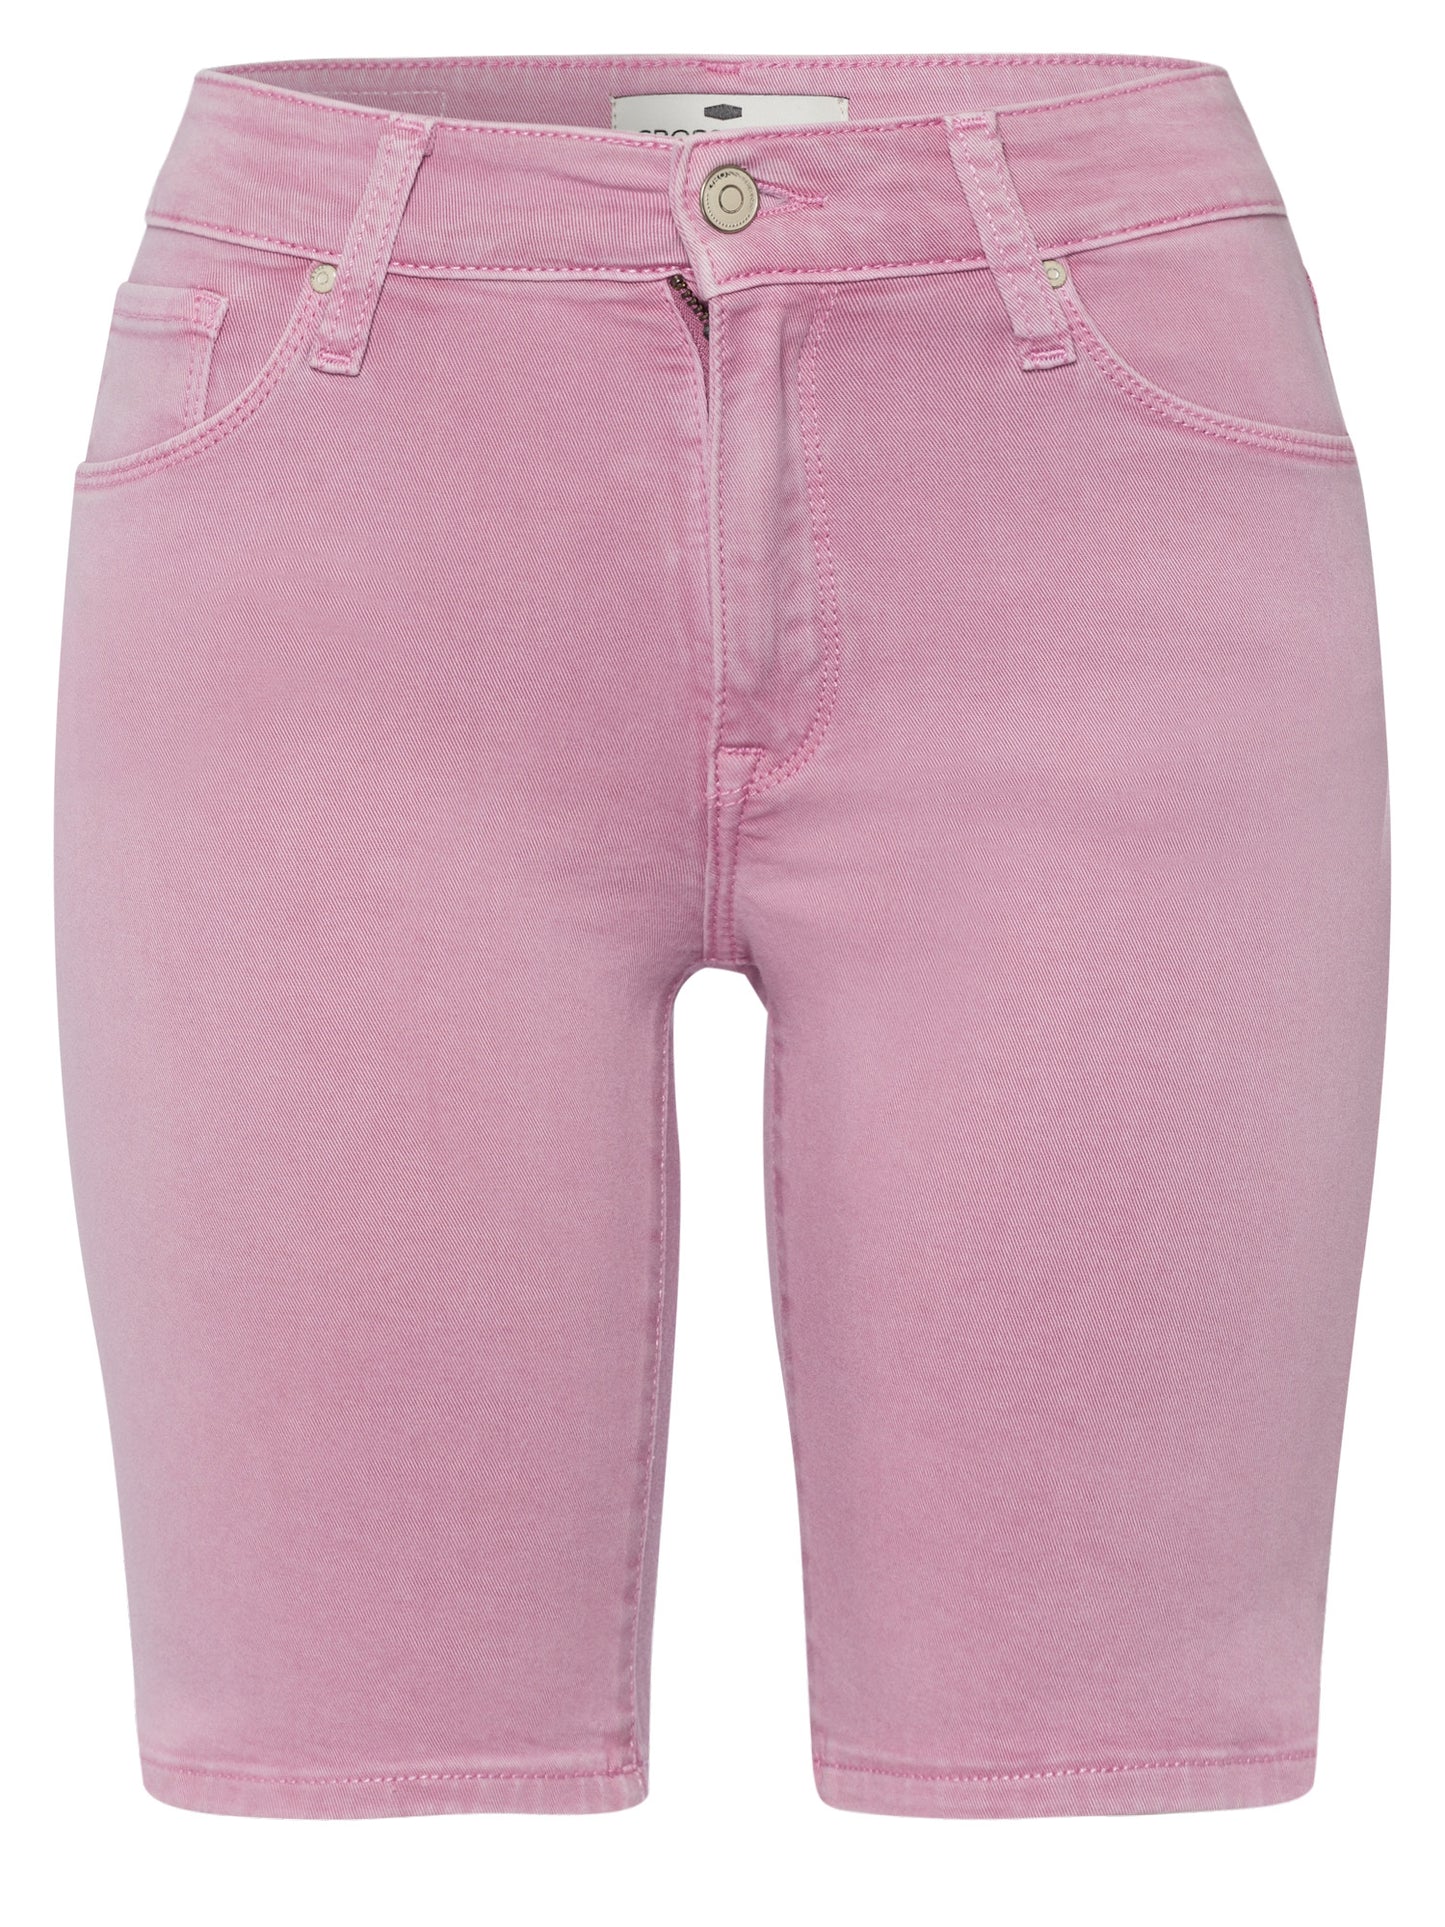 Women's Jeans Shorts Anya Slim Fit High Waist light pink